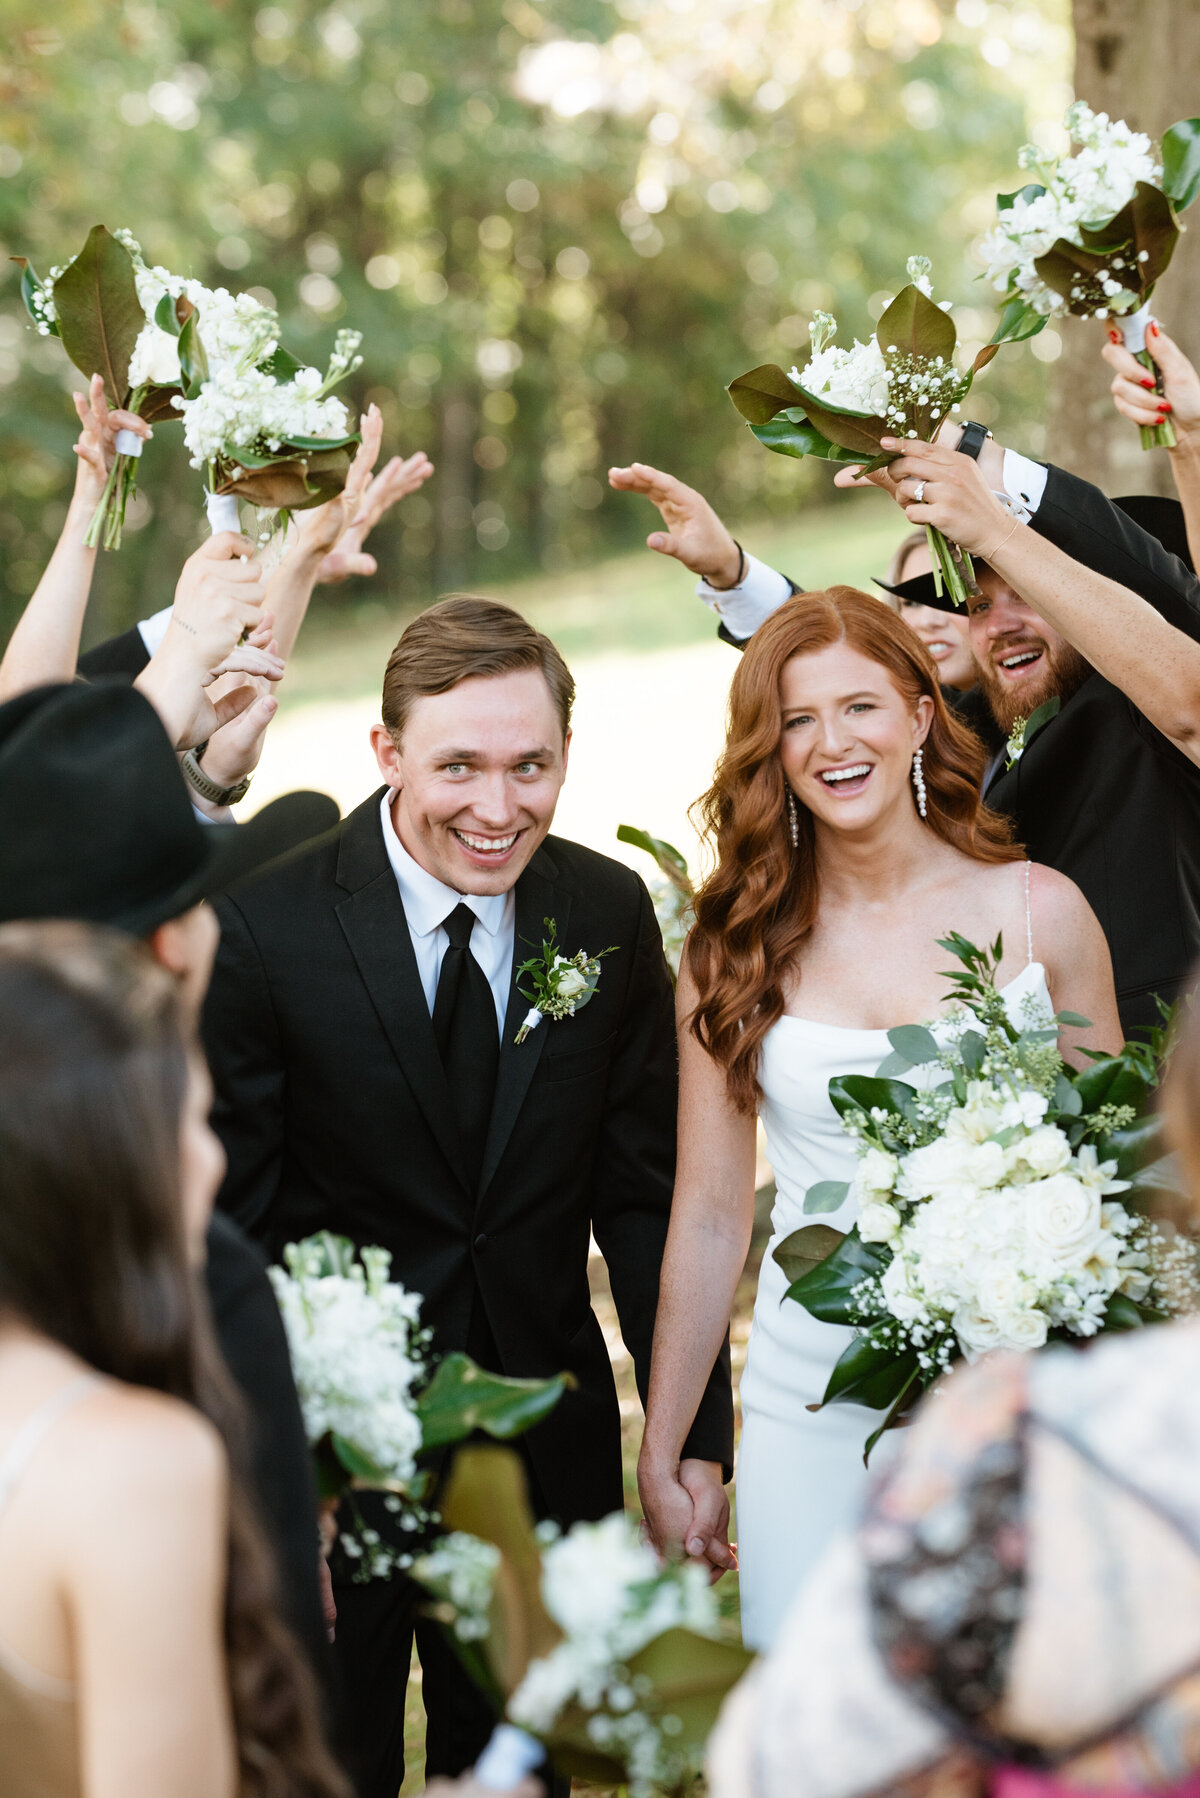 Cookeville, Tennessee Wedding | South Dakota Wedding Planner7